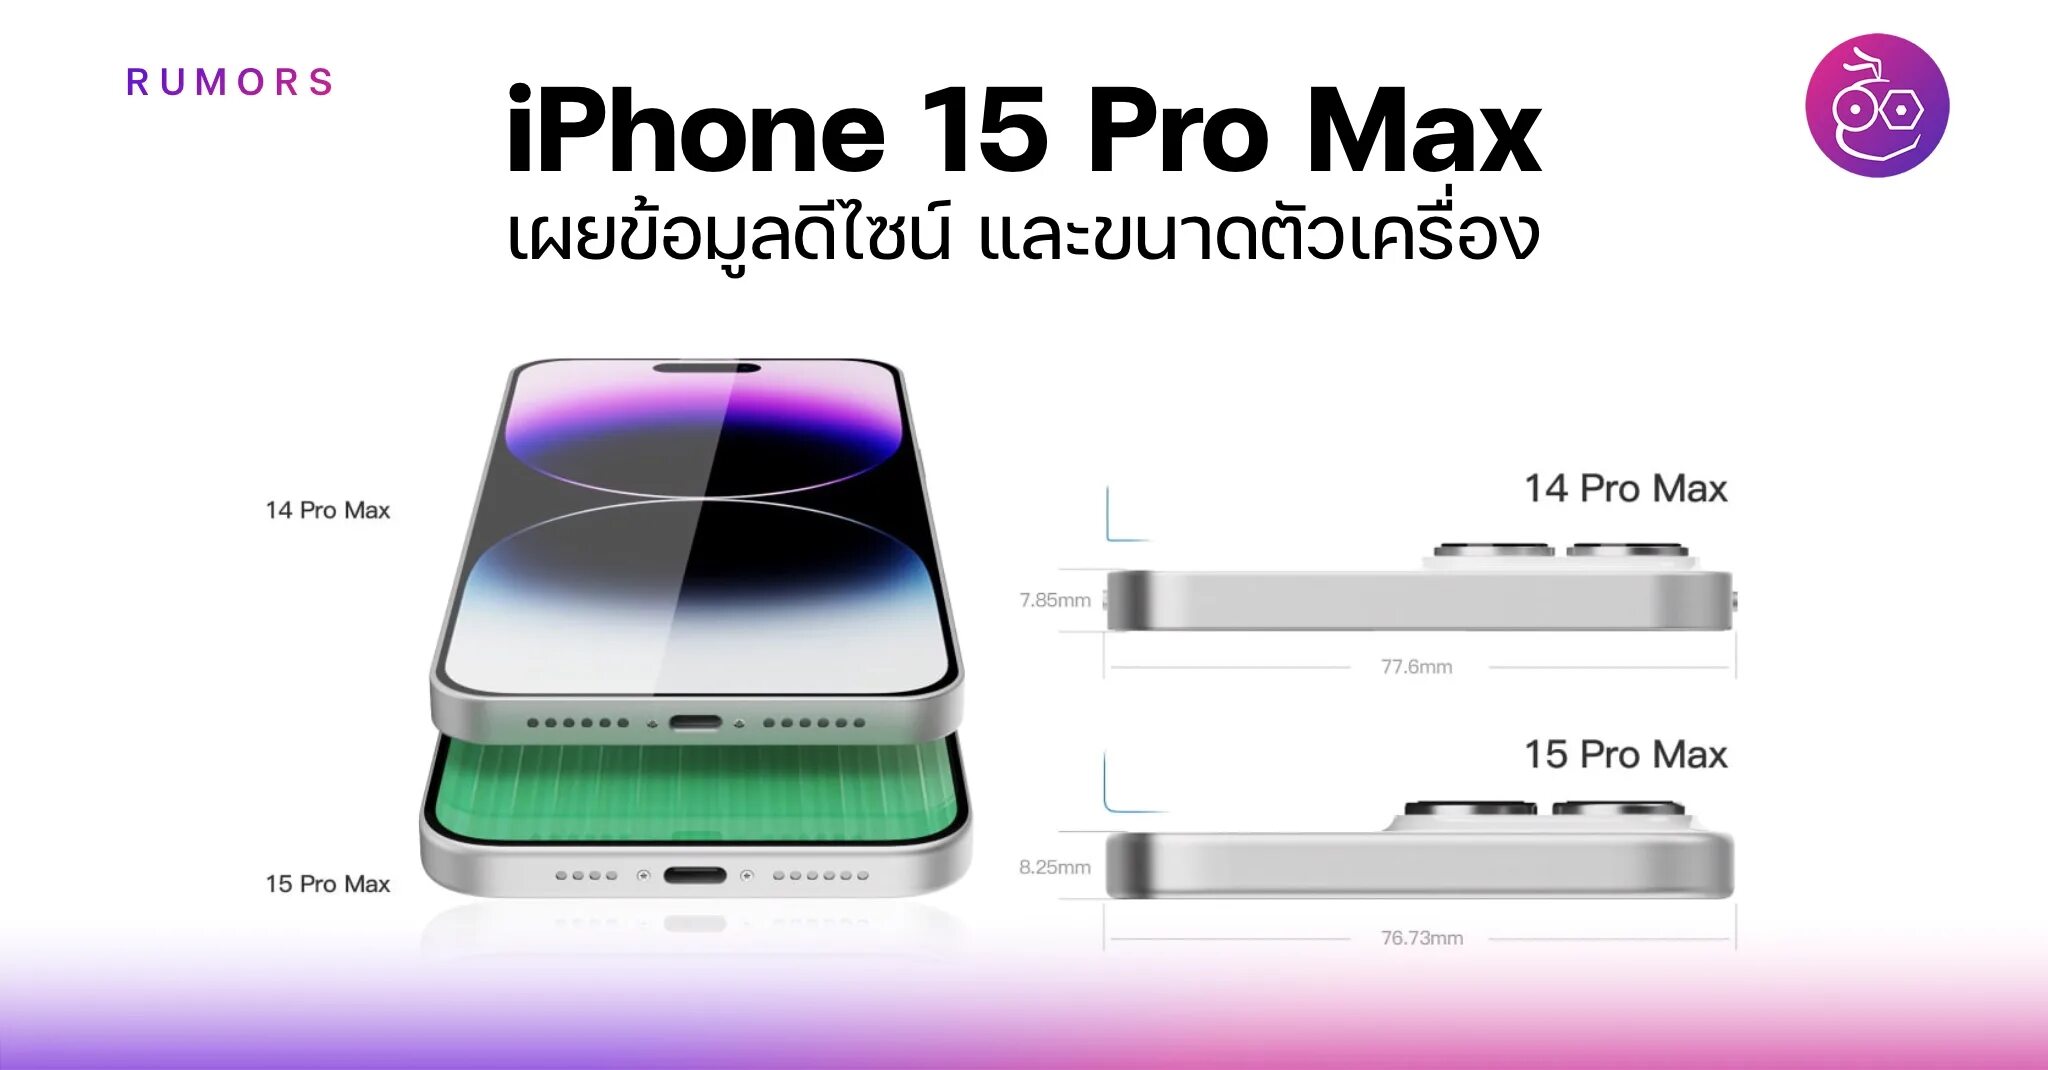 S24 или iphone 15 pro max. Айфон 15 Pro Max. Iphone Promax 15 Max. Айфон 15 про Мах фото. Как айфон 15.